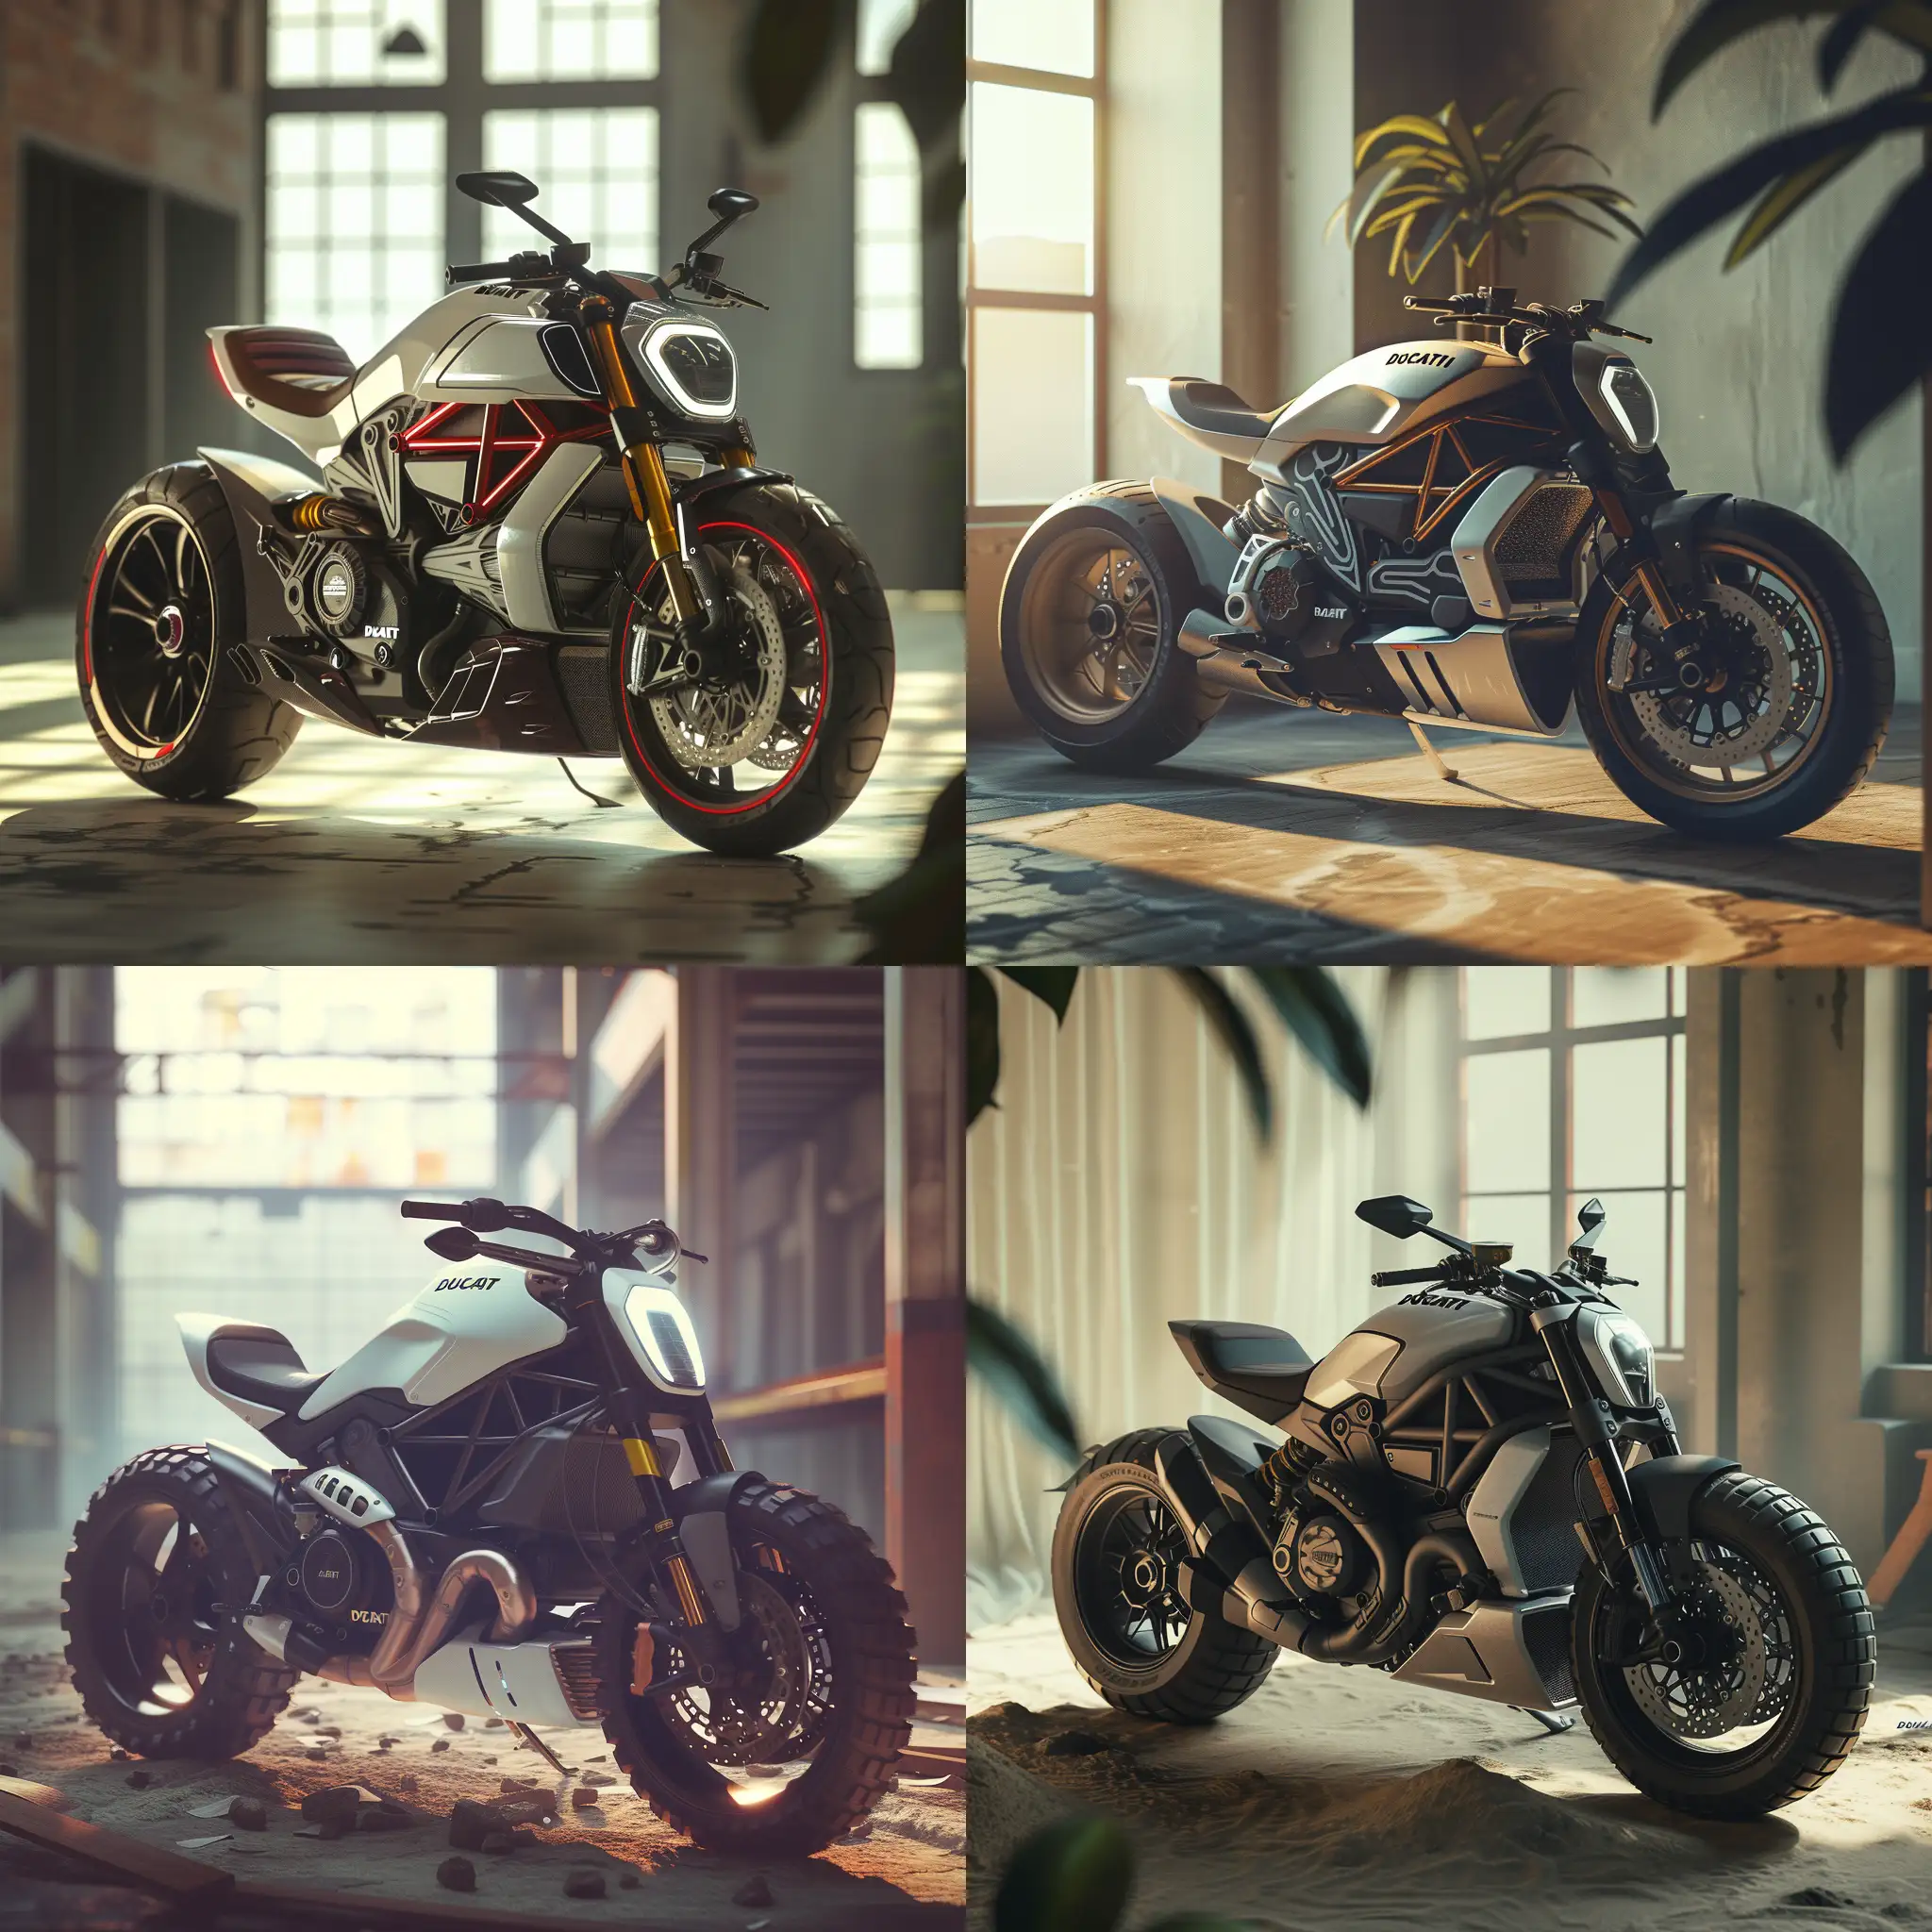 Futuristic-Ducati-Motorcycle-in-Concrete-Room-Masterpiece-Photo-Shot